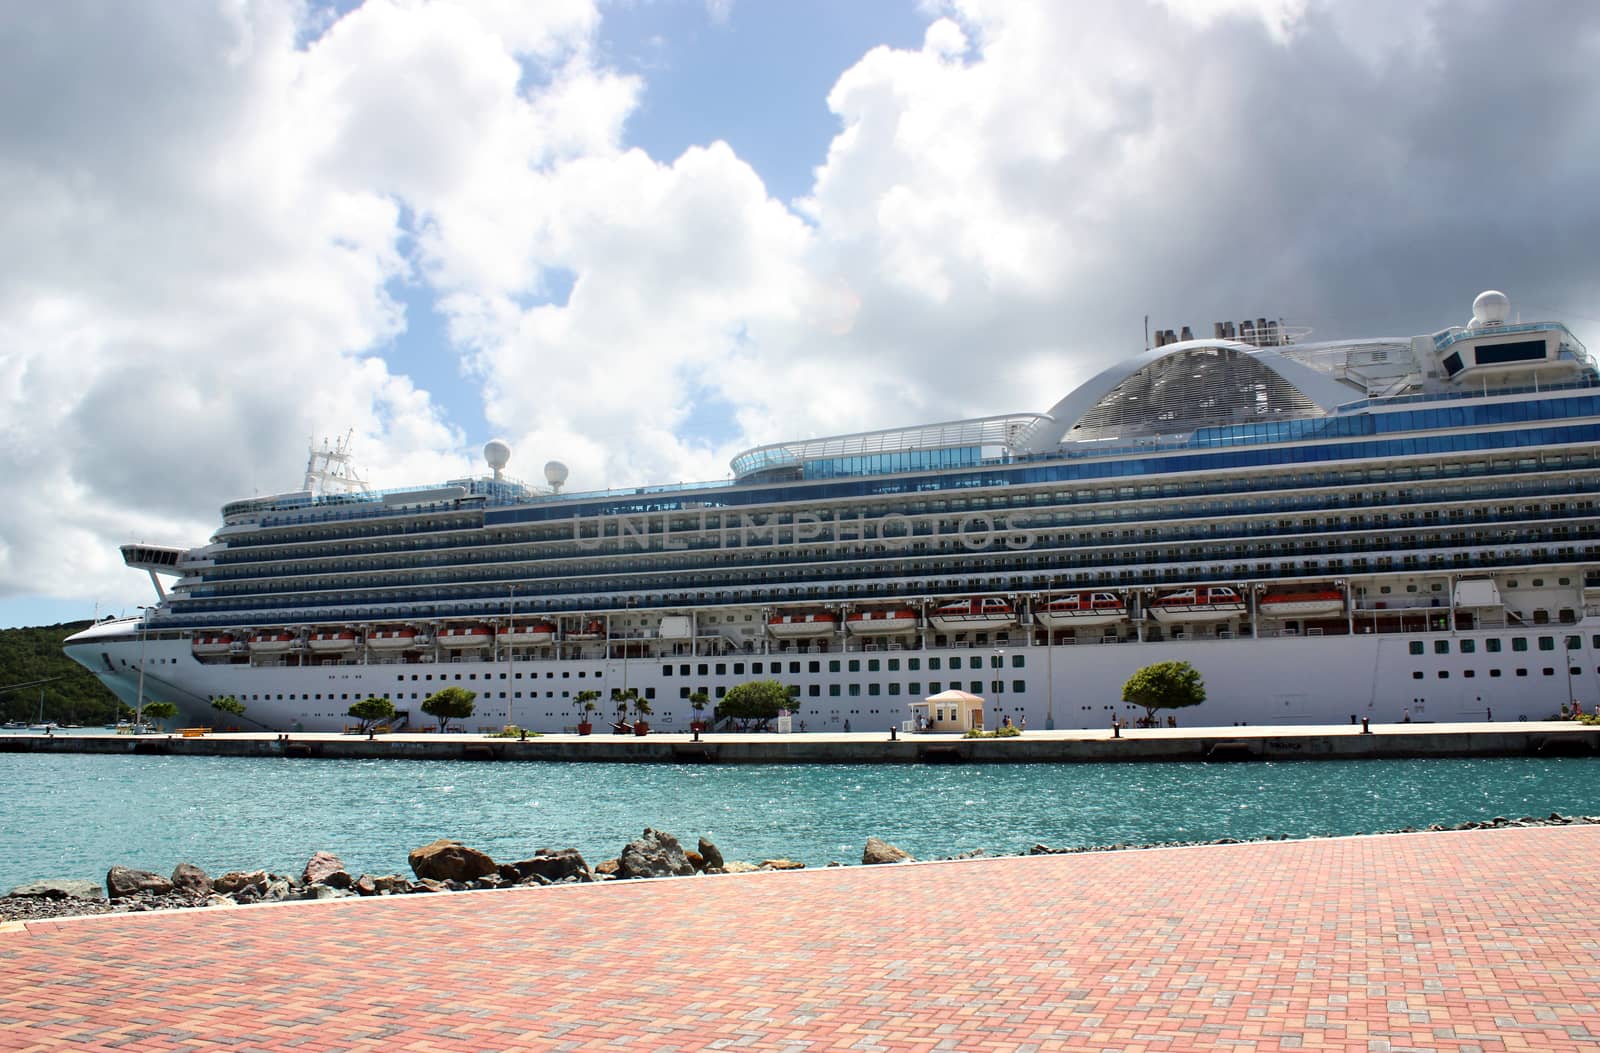 Big cruise ship near tropical island